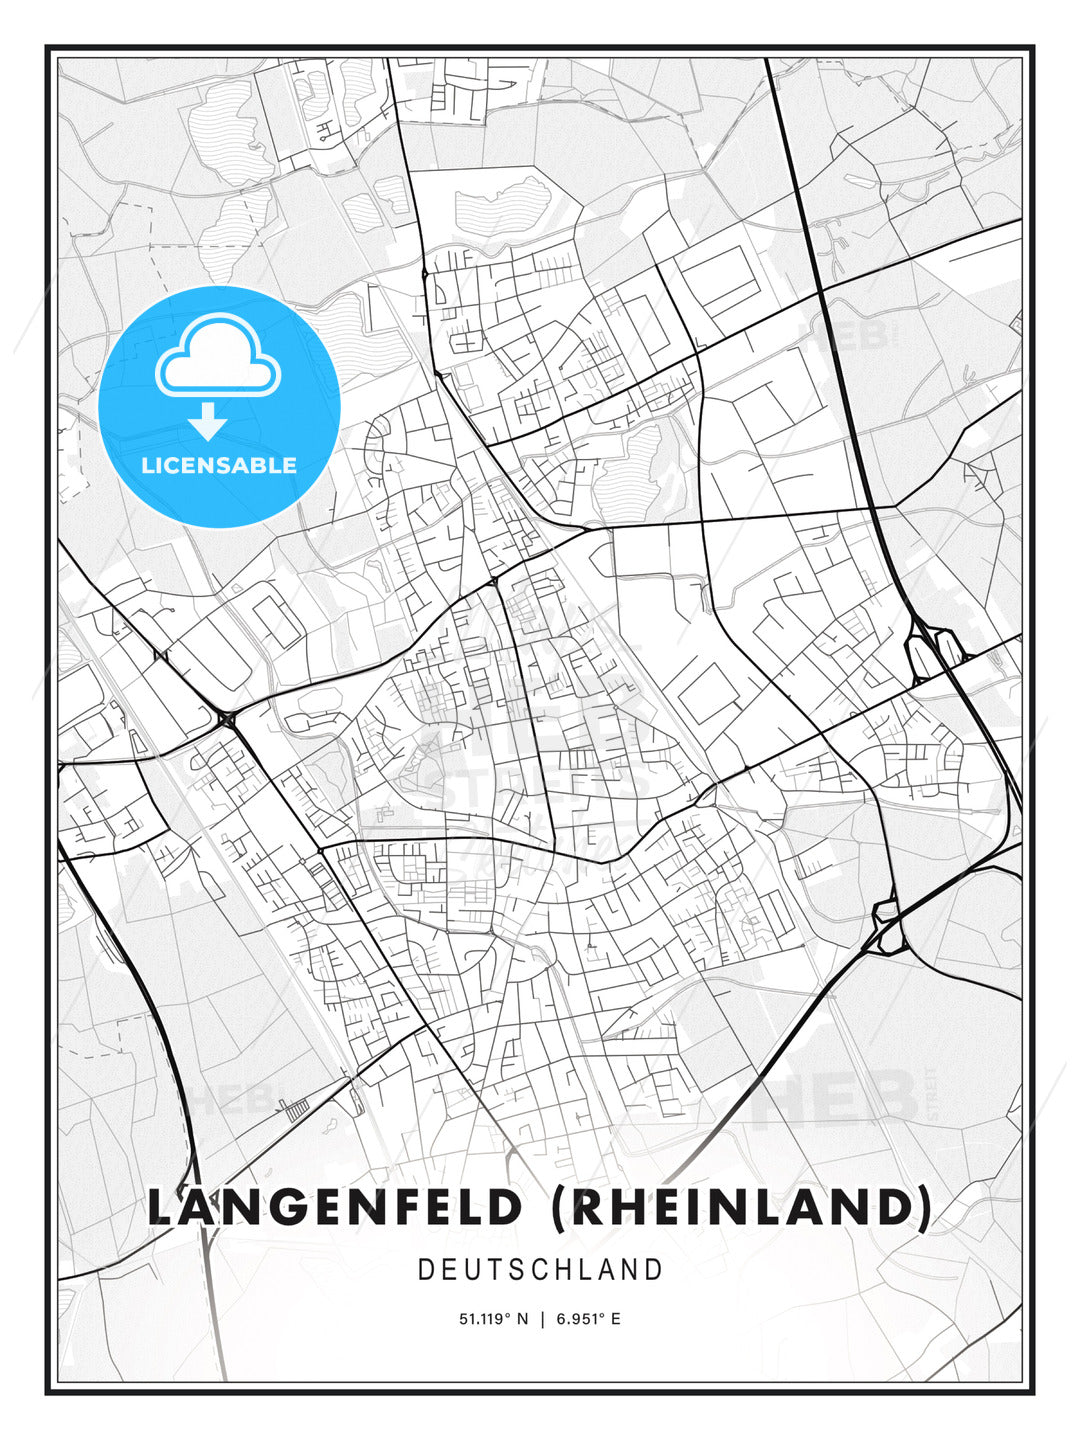 Langenfeld (Rheinland), Germany, Modern Print Template in Various Formats - HEBSTREITS Sketches